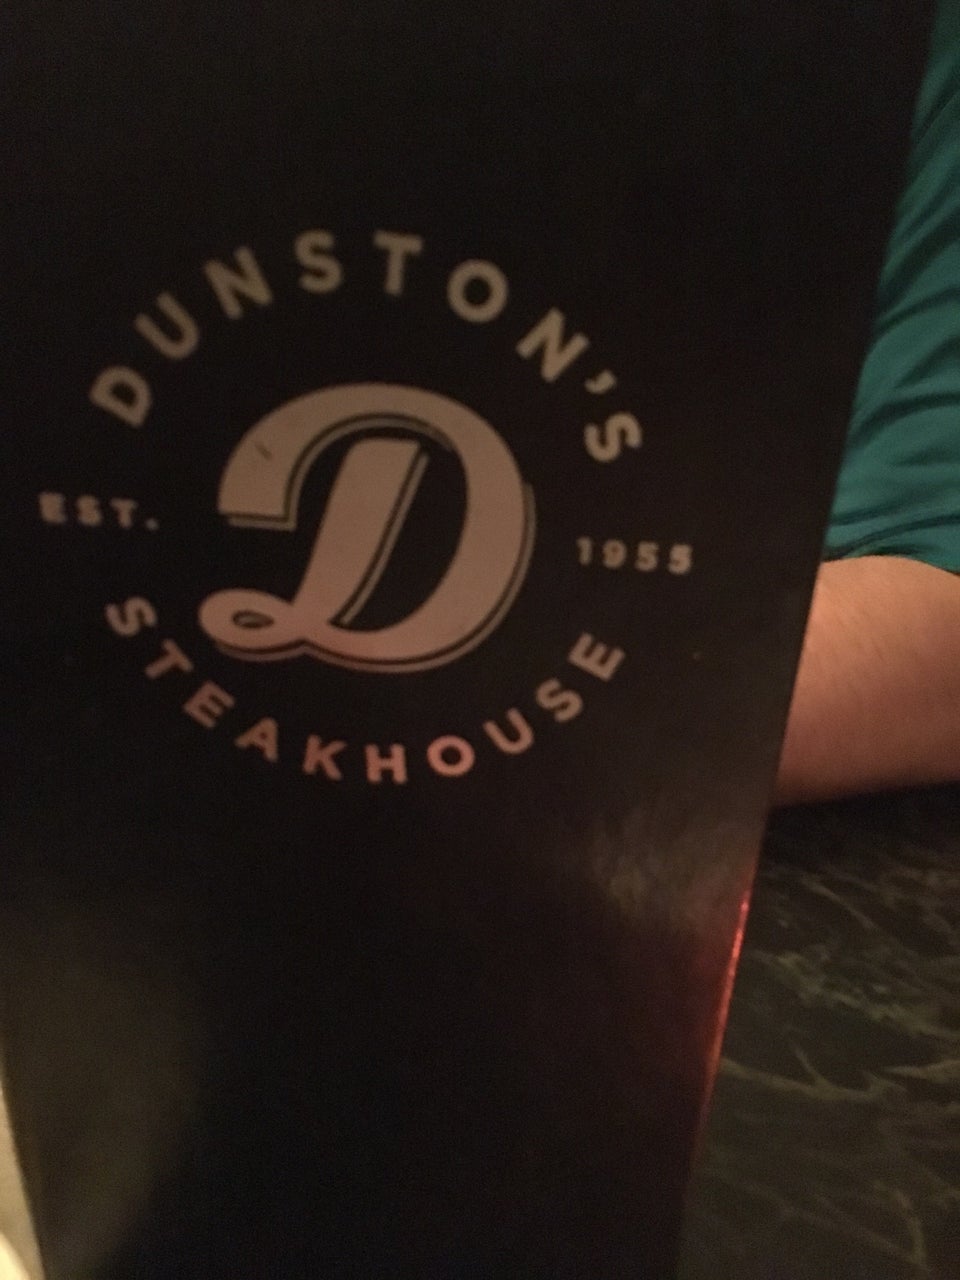 Photo of Dunston's Steakhouse